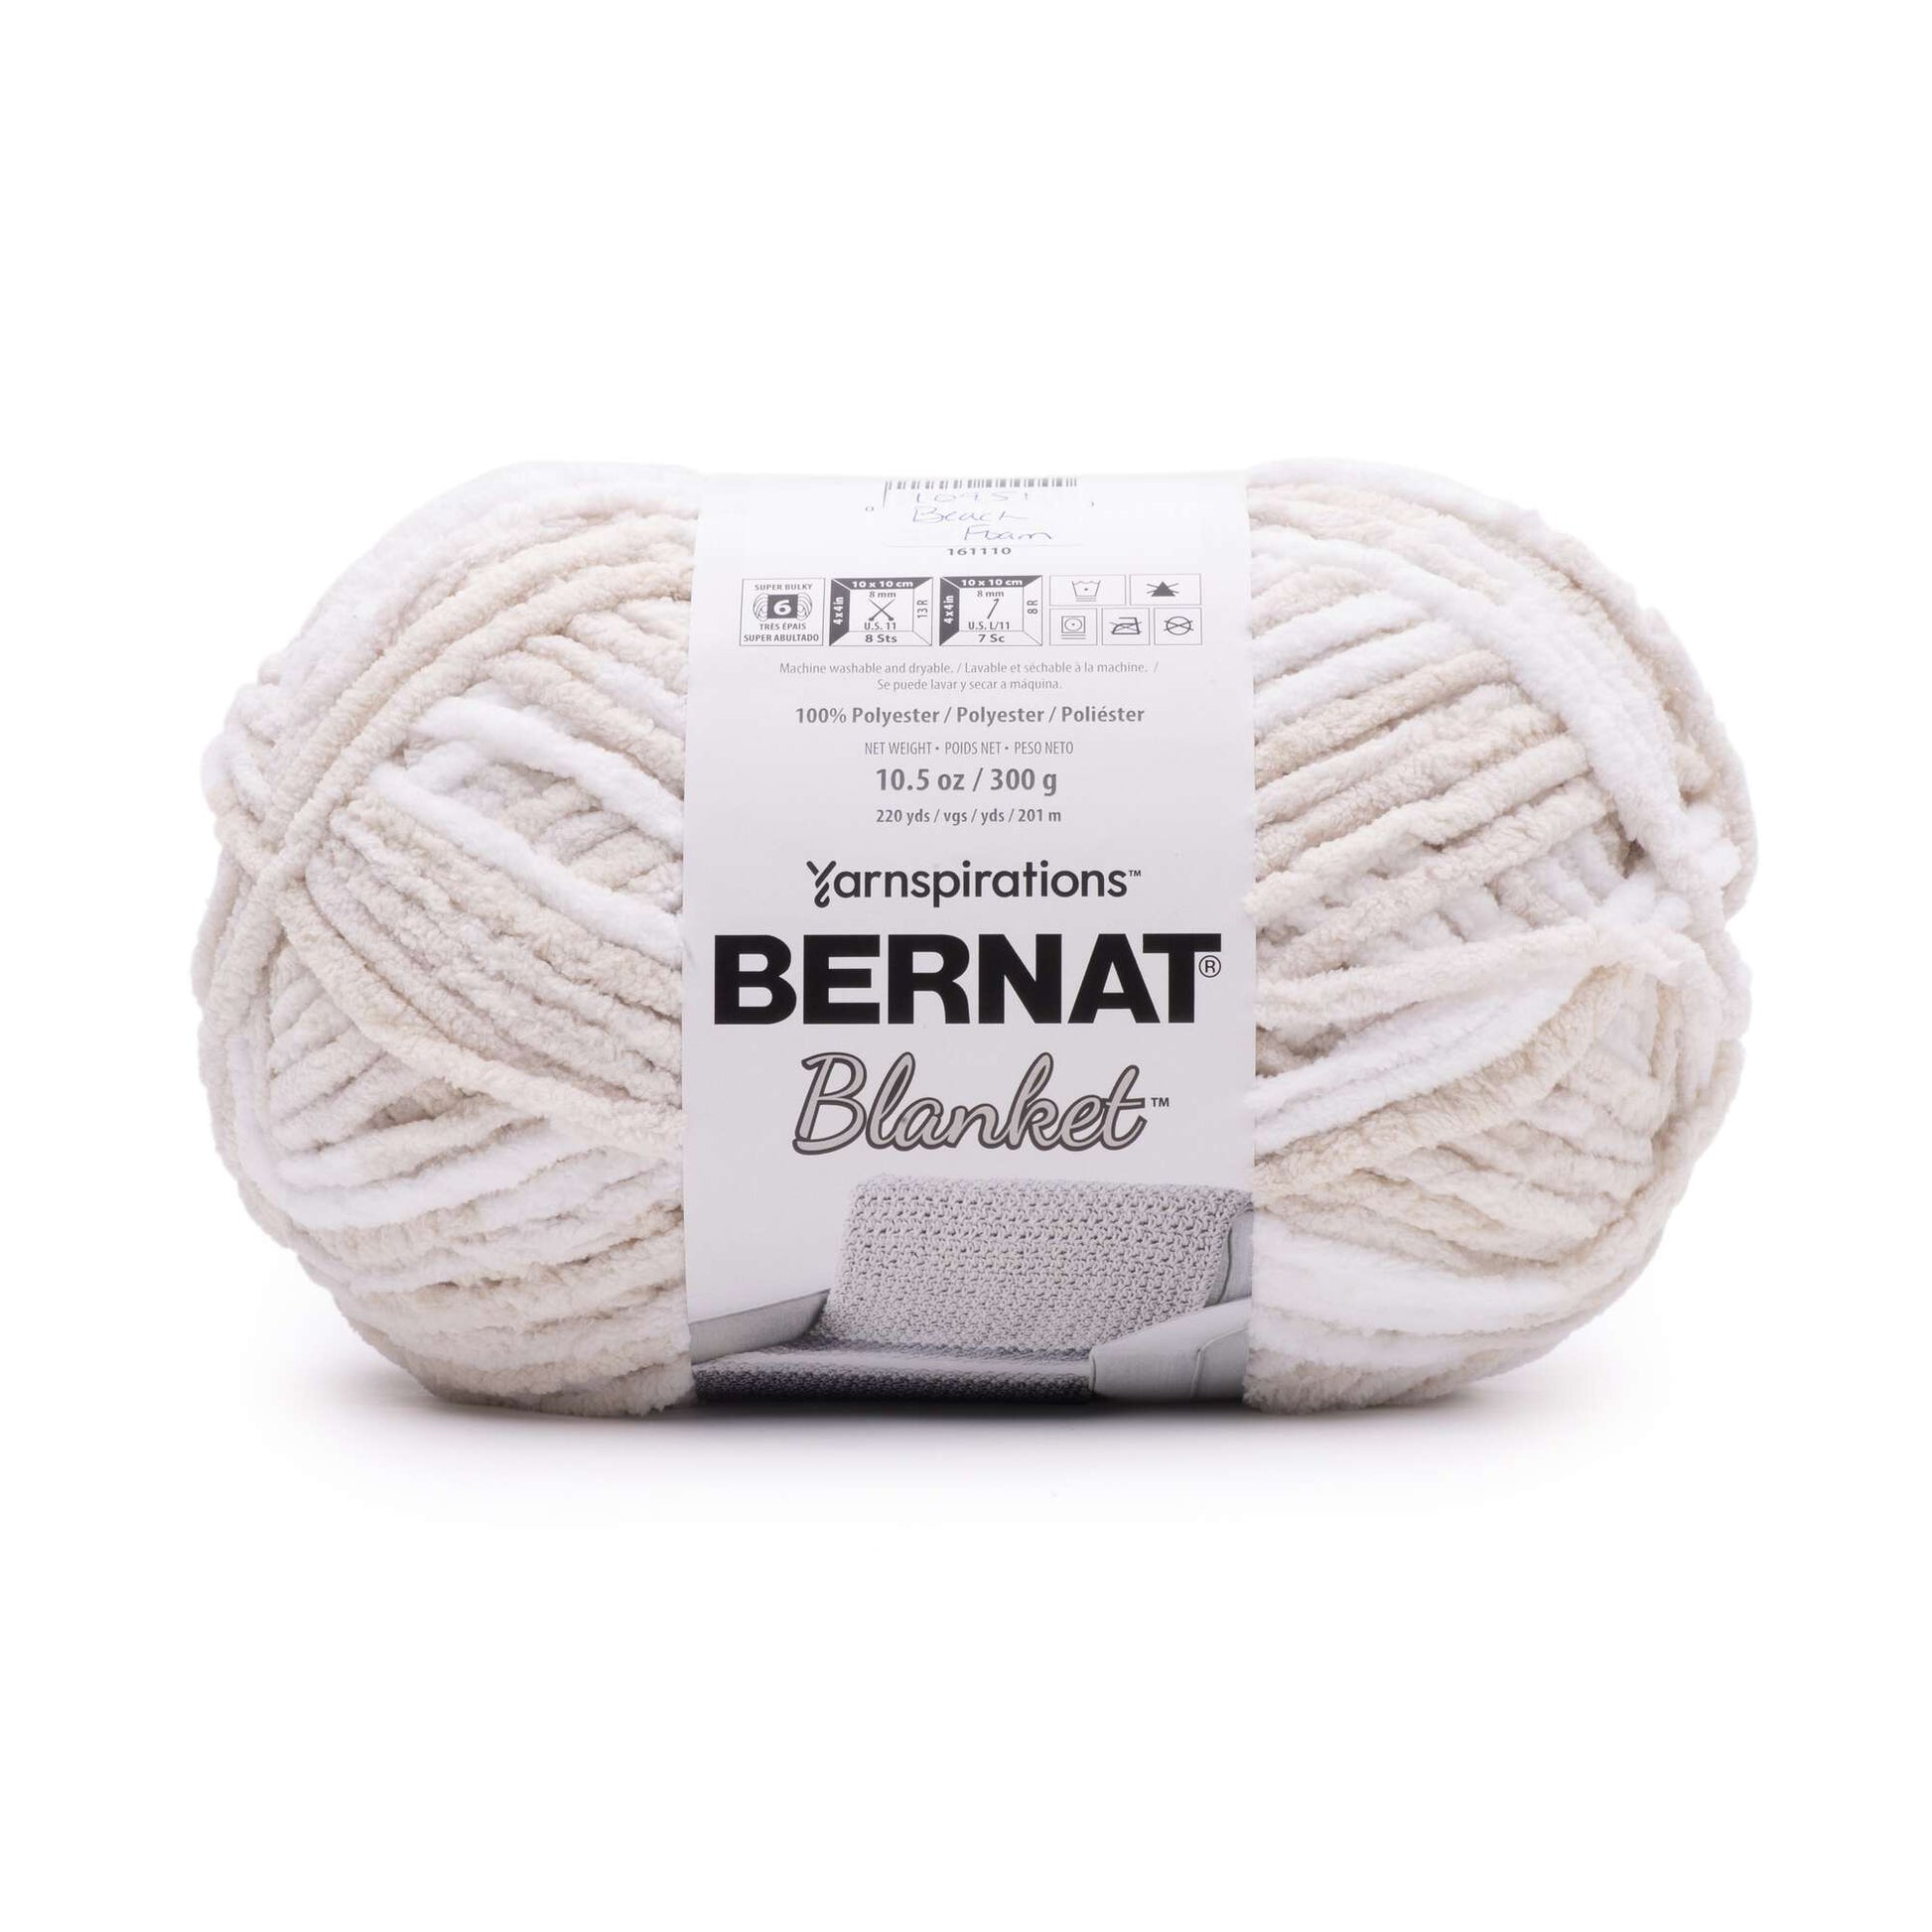 Bernat Blanket Big Ball Yarn - Gathering Moss, Multipack of 12 